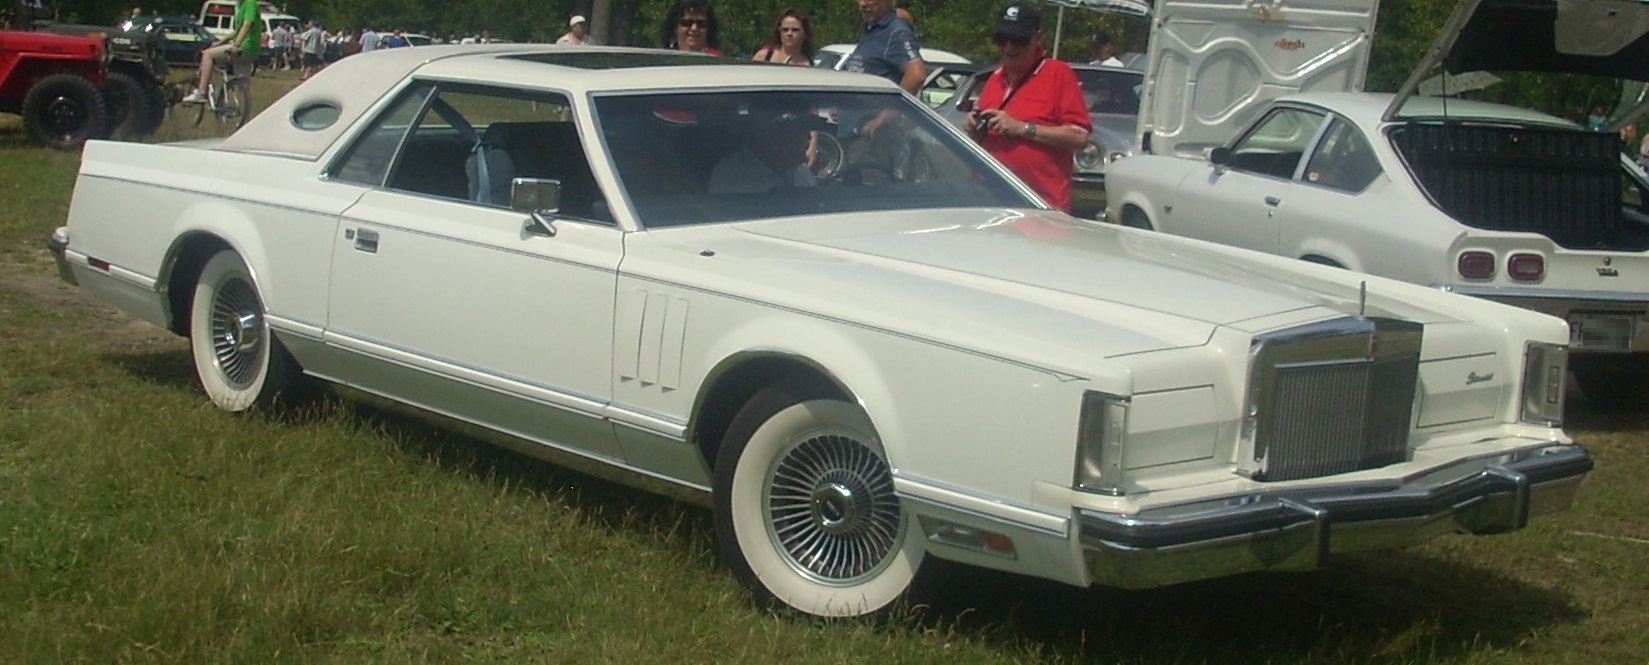 Lincoln Continental Mark V